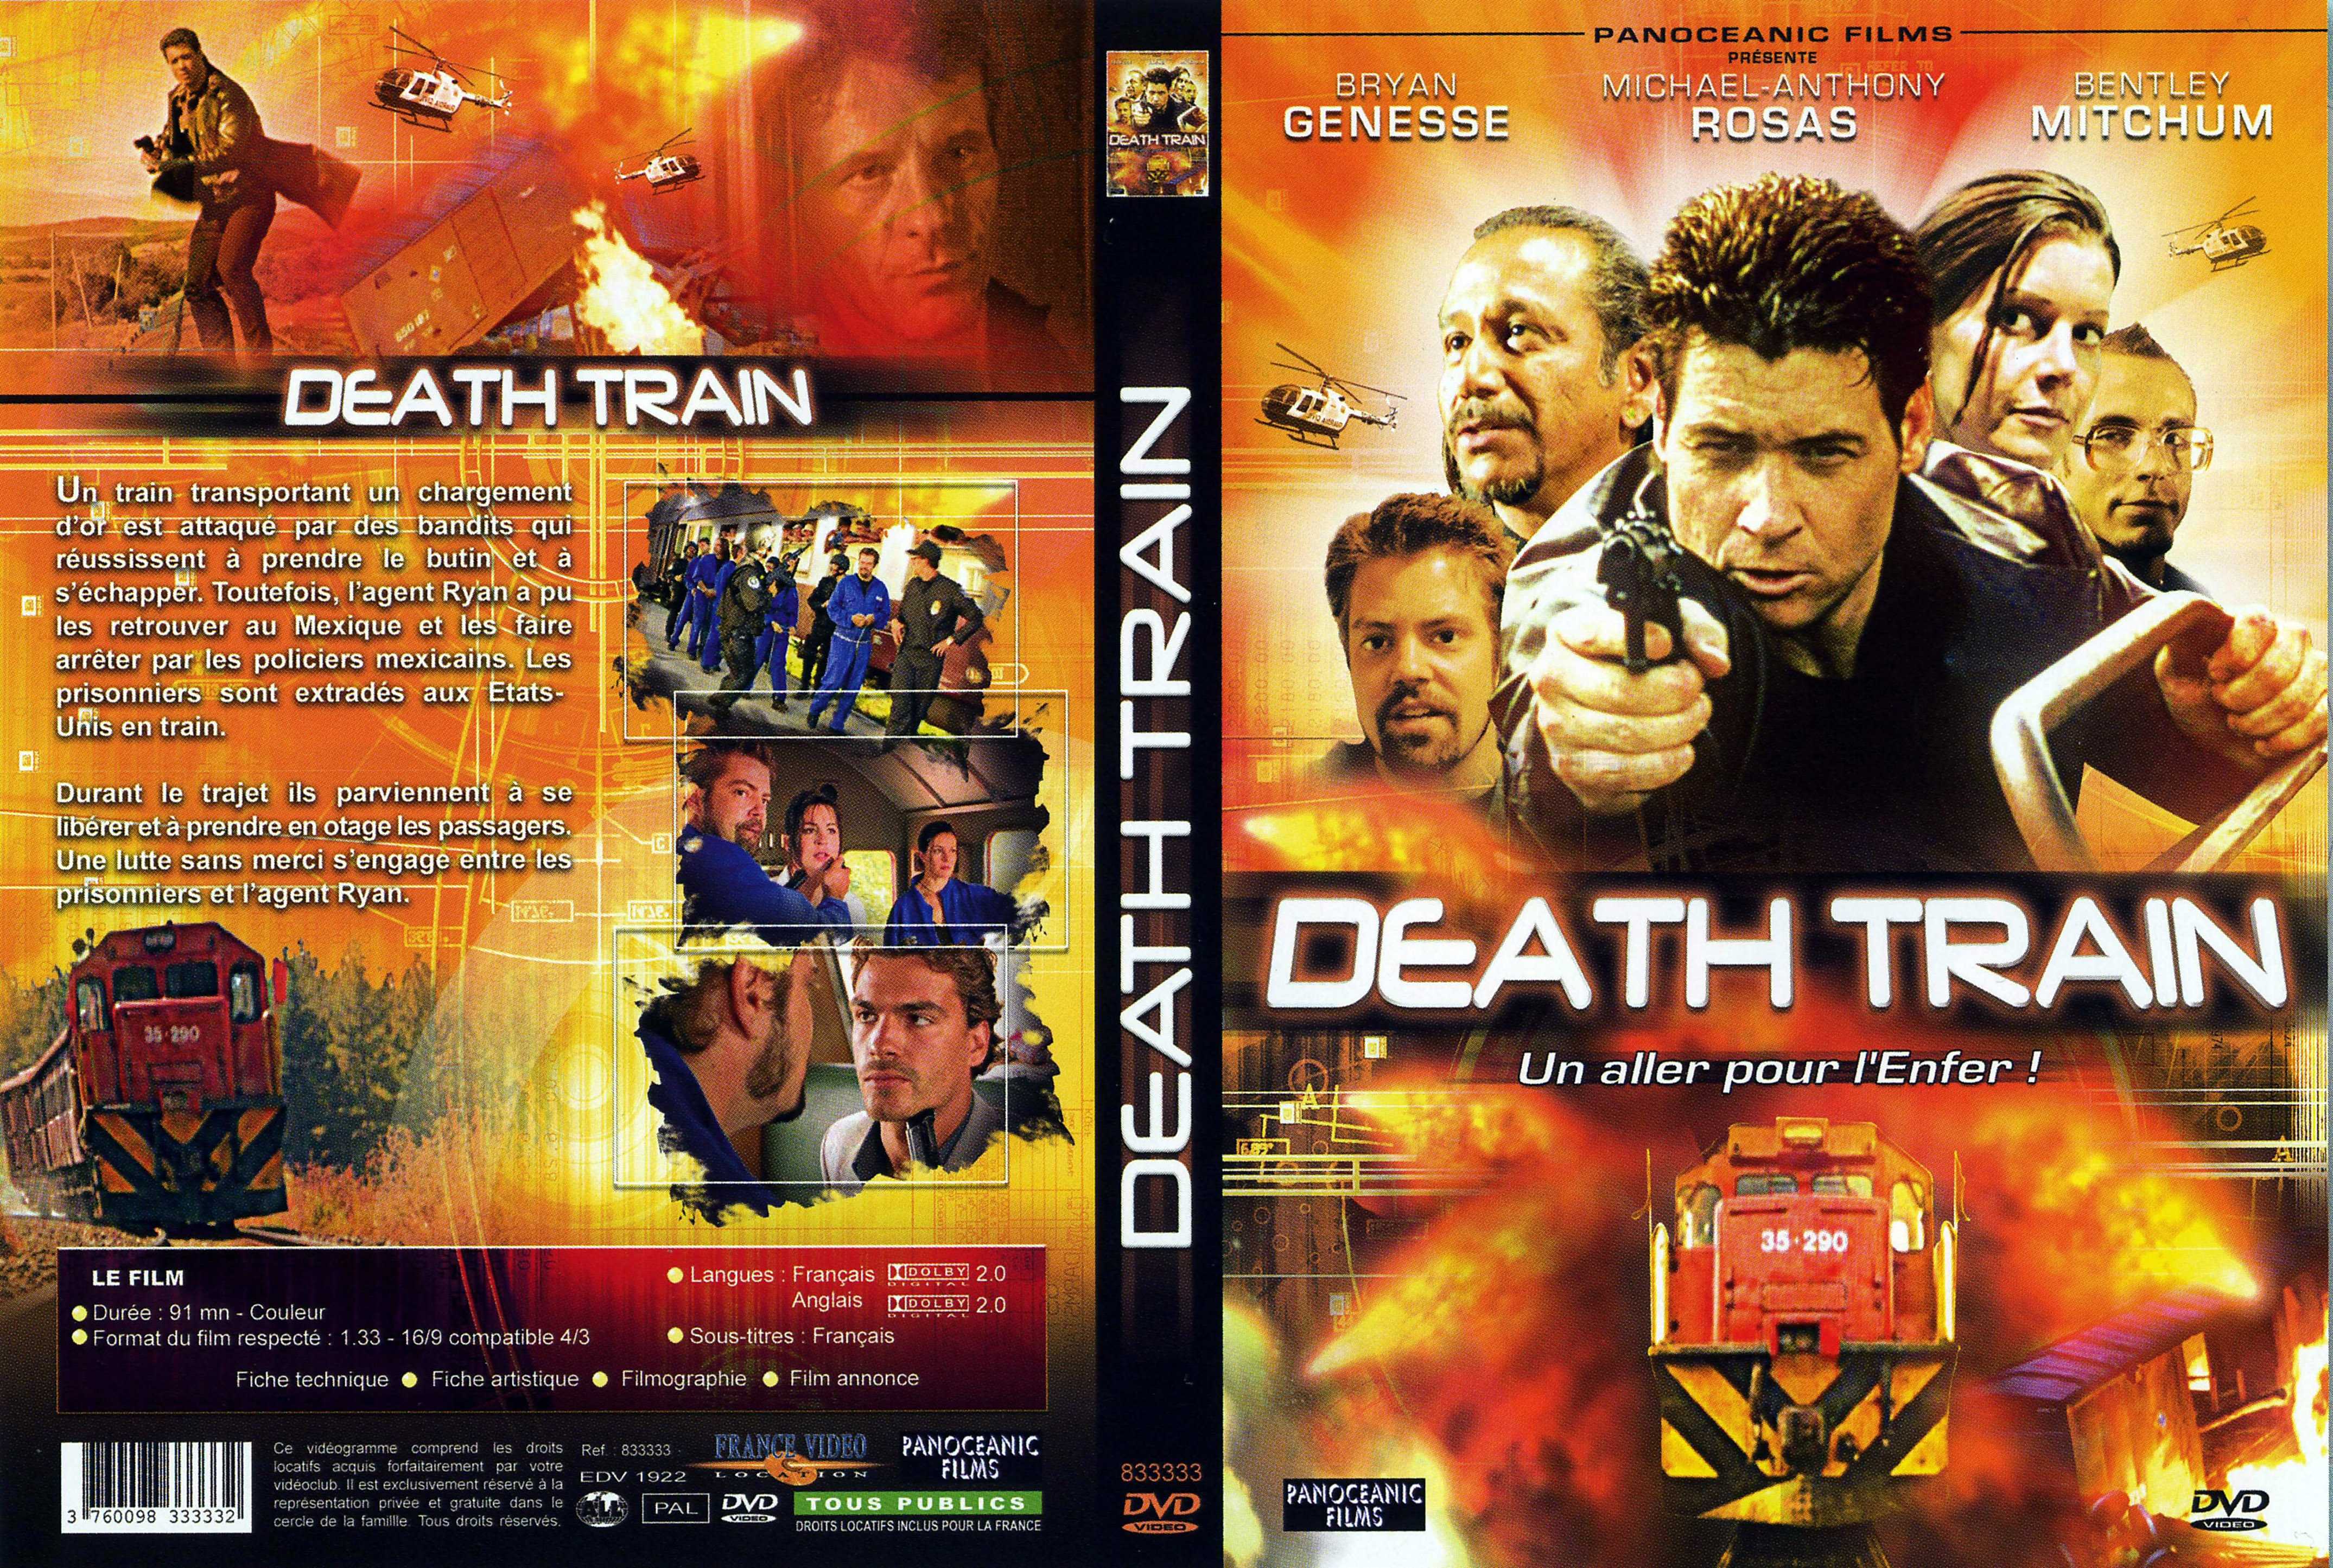 Jaquette DVD Death train